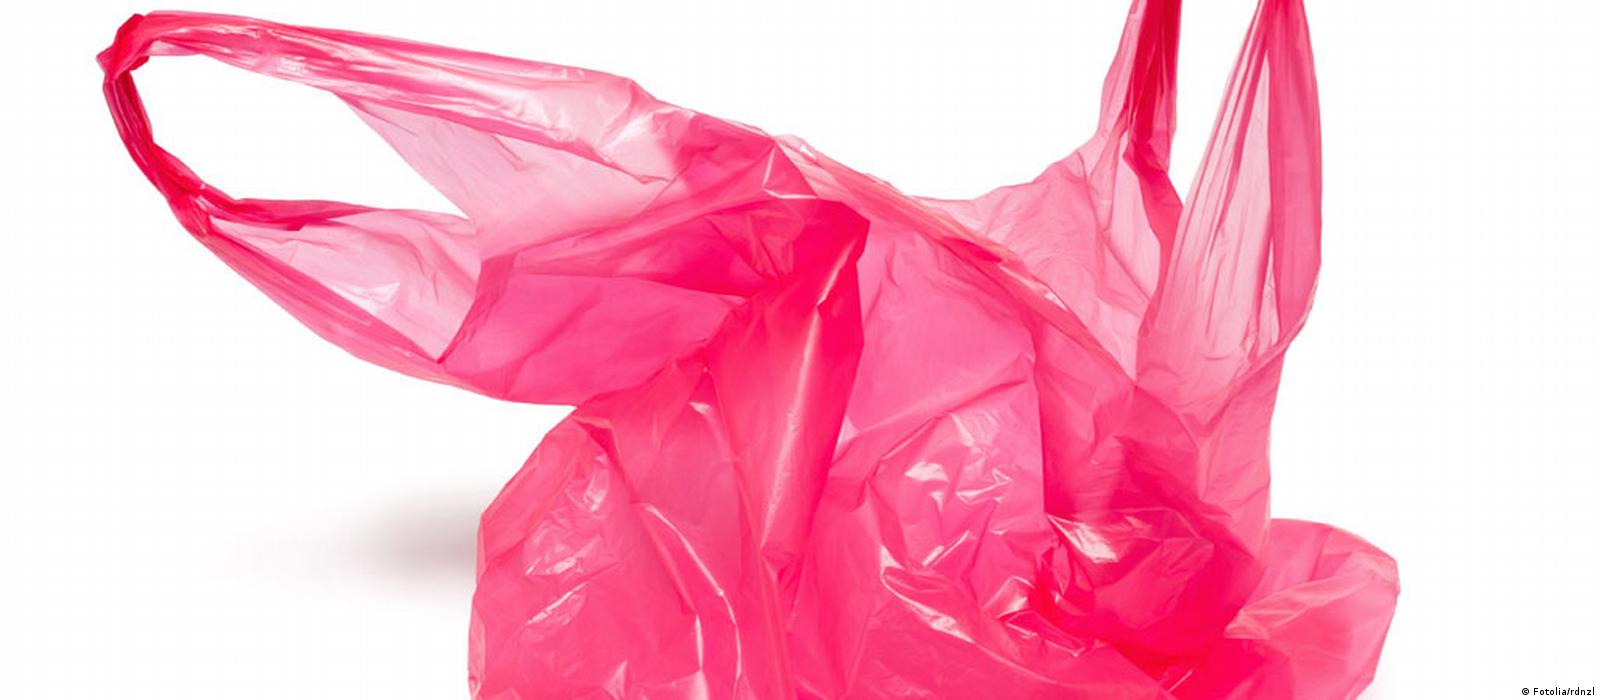 EU to cut plastic bag use – DW – 04/16/2014